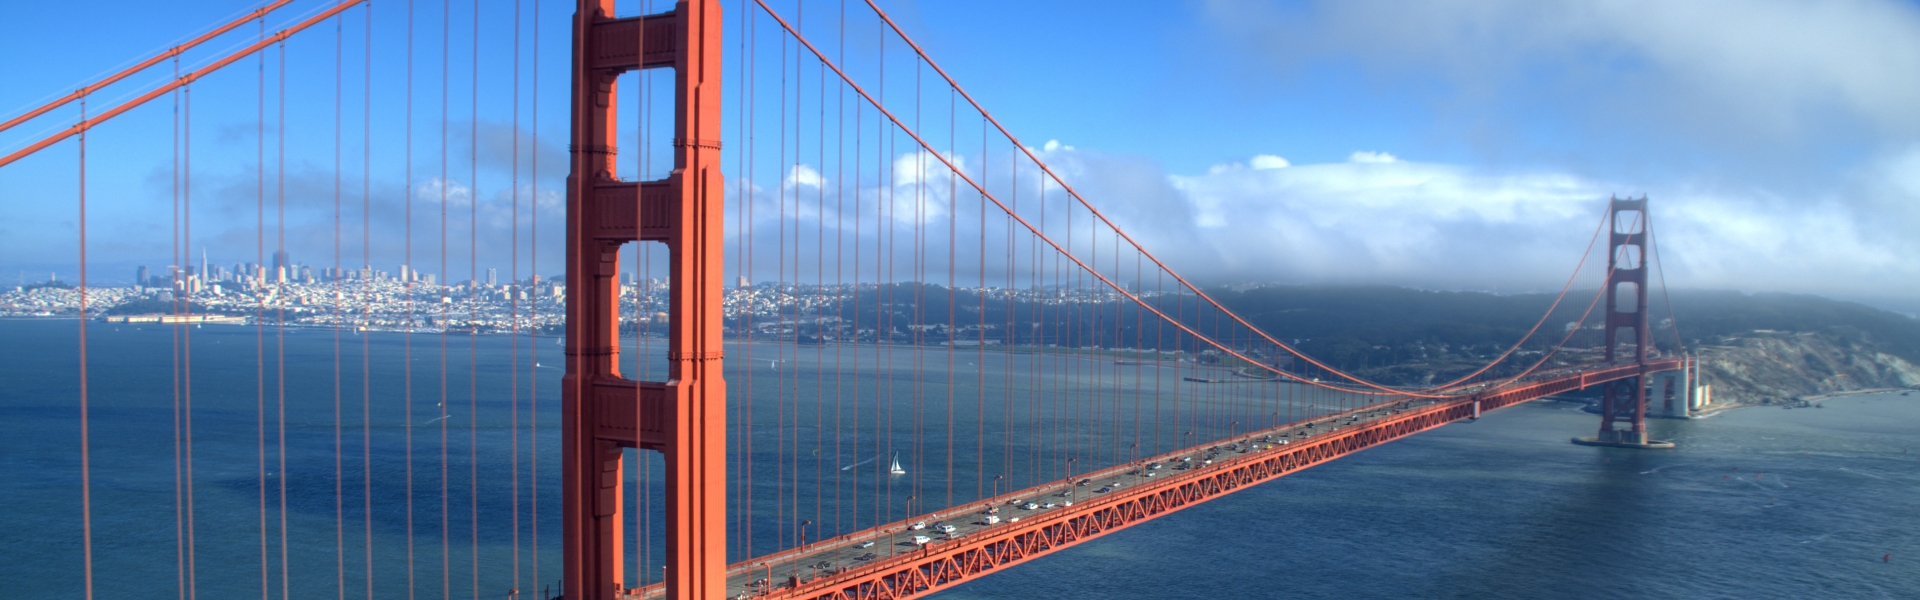 Golden Gate Bridge and Beyond